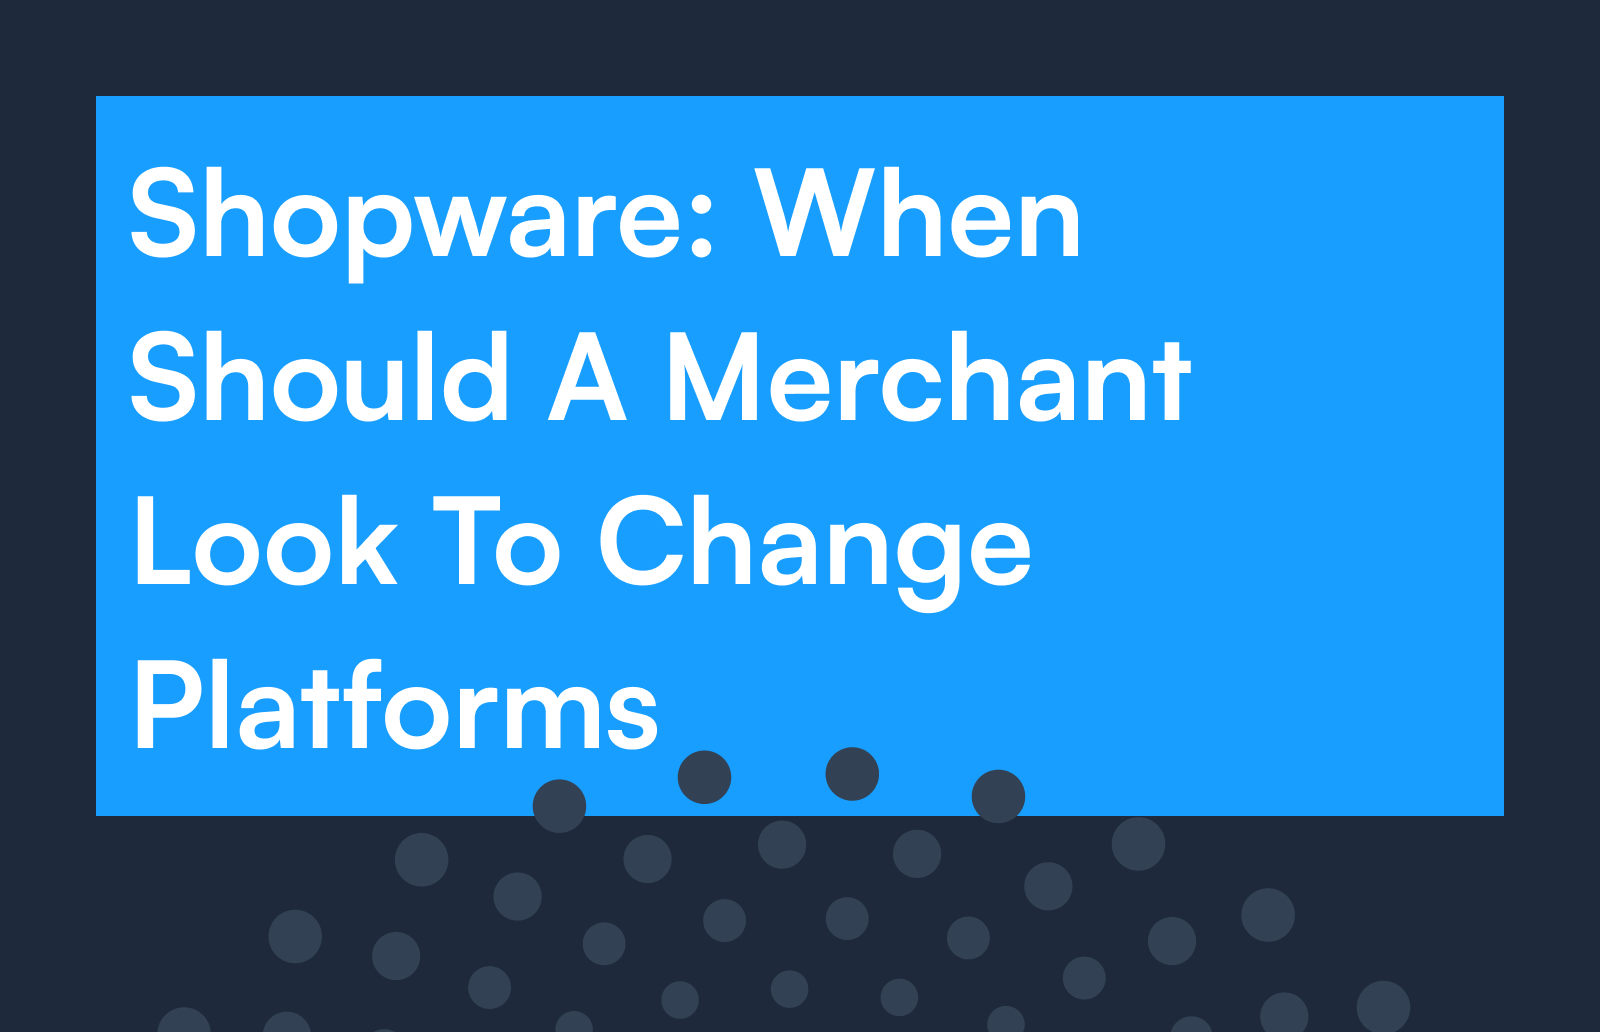 Shopware: When Should A Merchant Look To Change Platforms